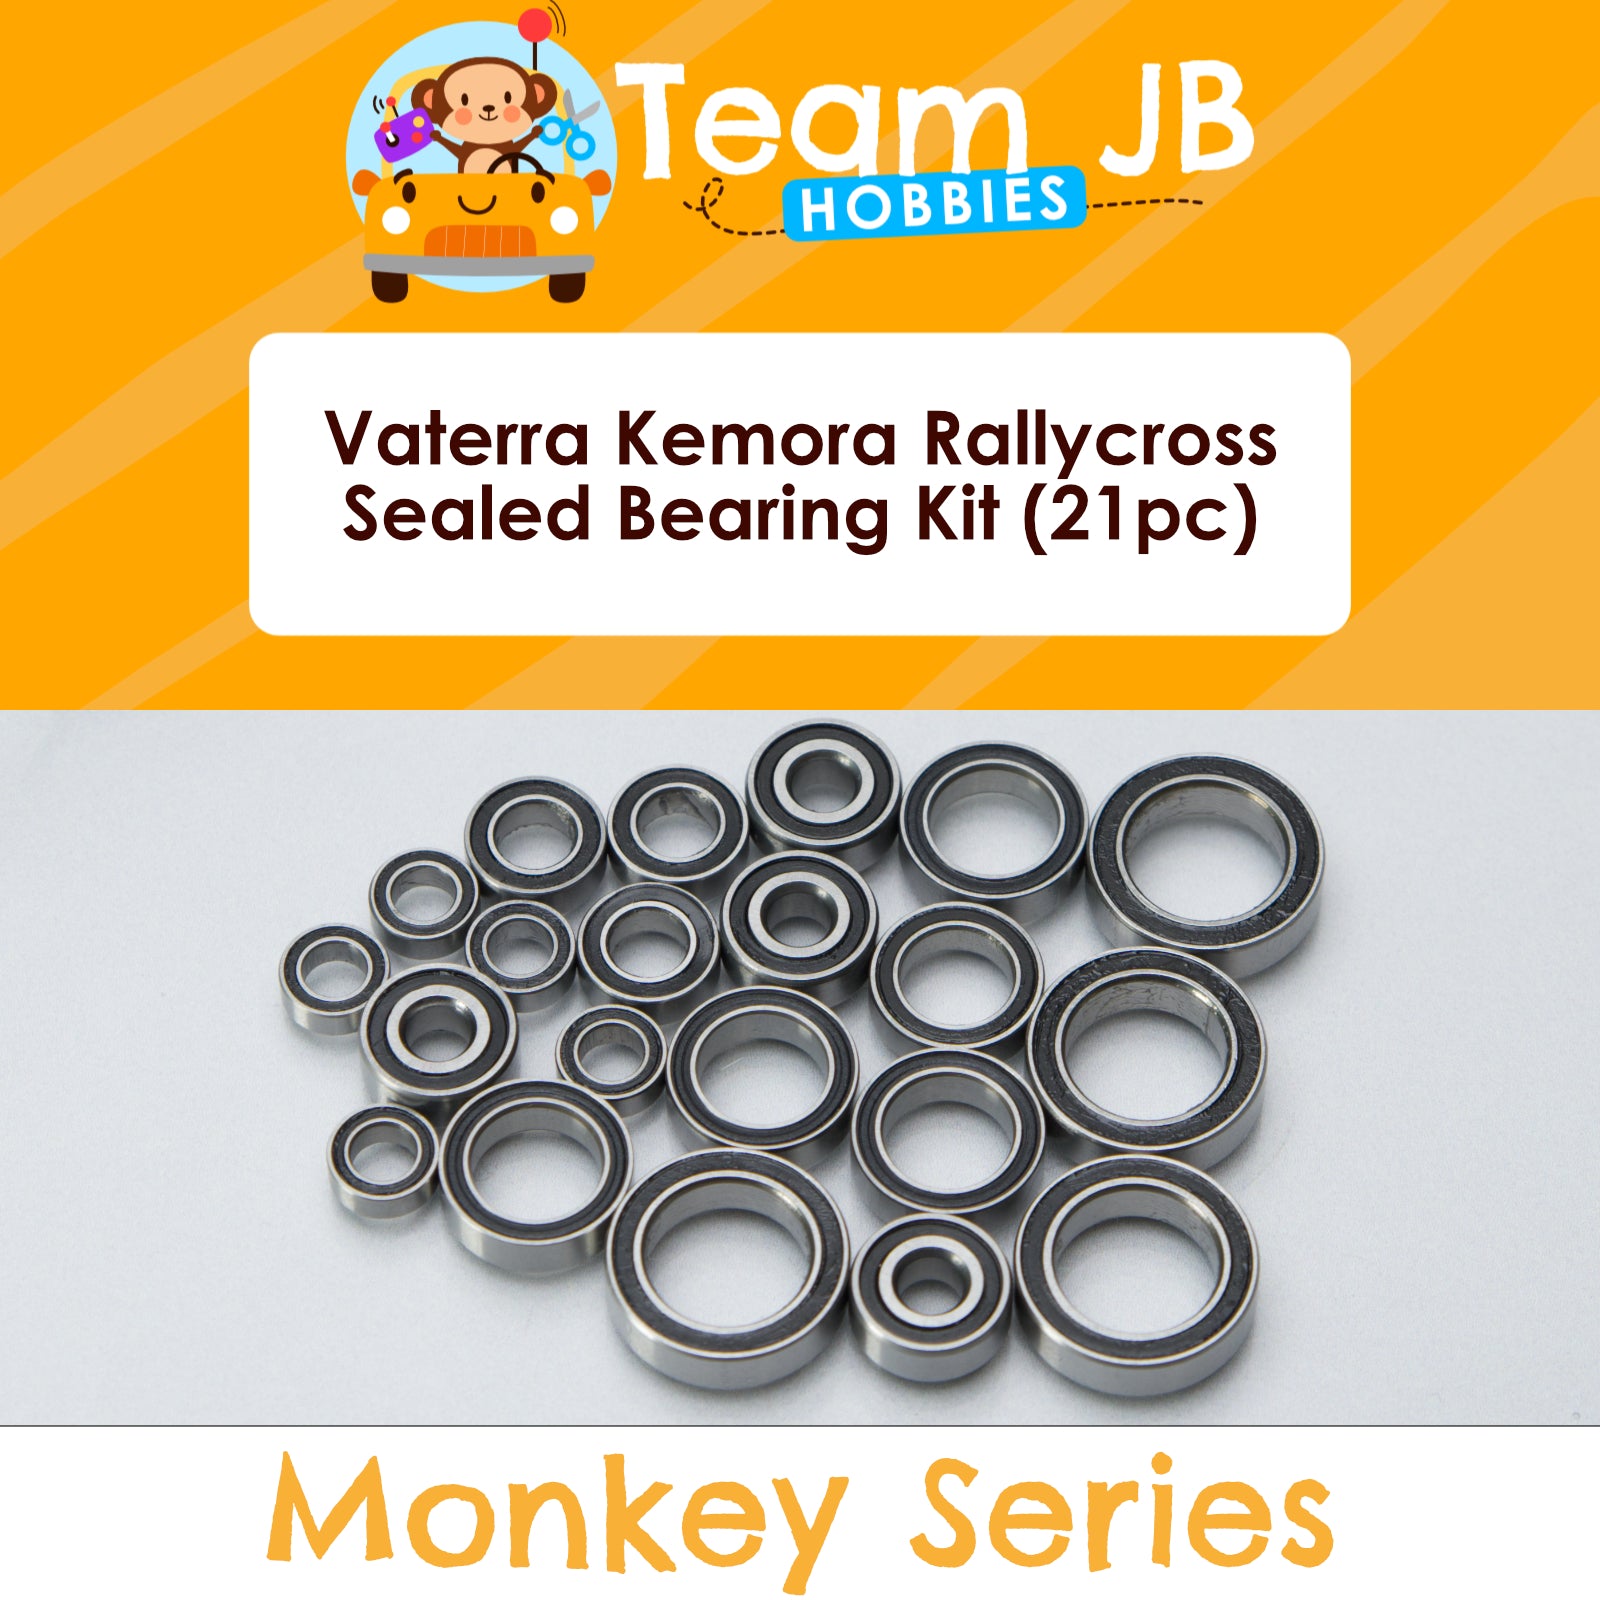 Vaterra Kemora Rallycross - Sealed Bearing Kit